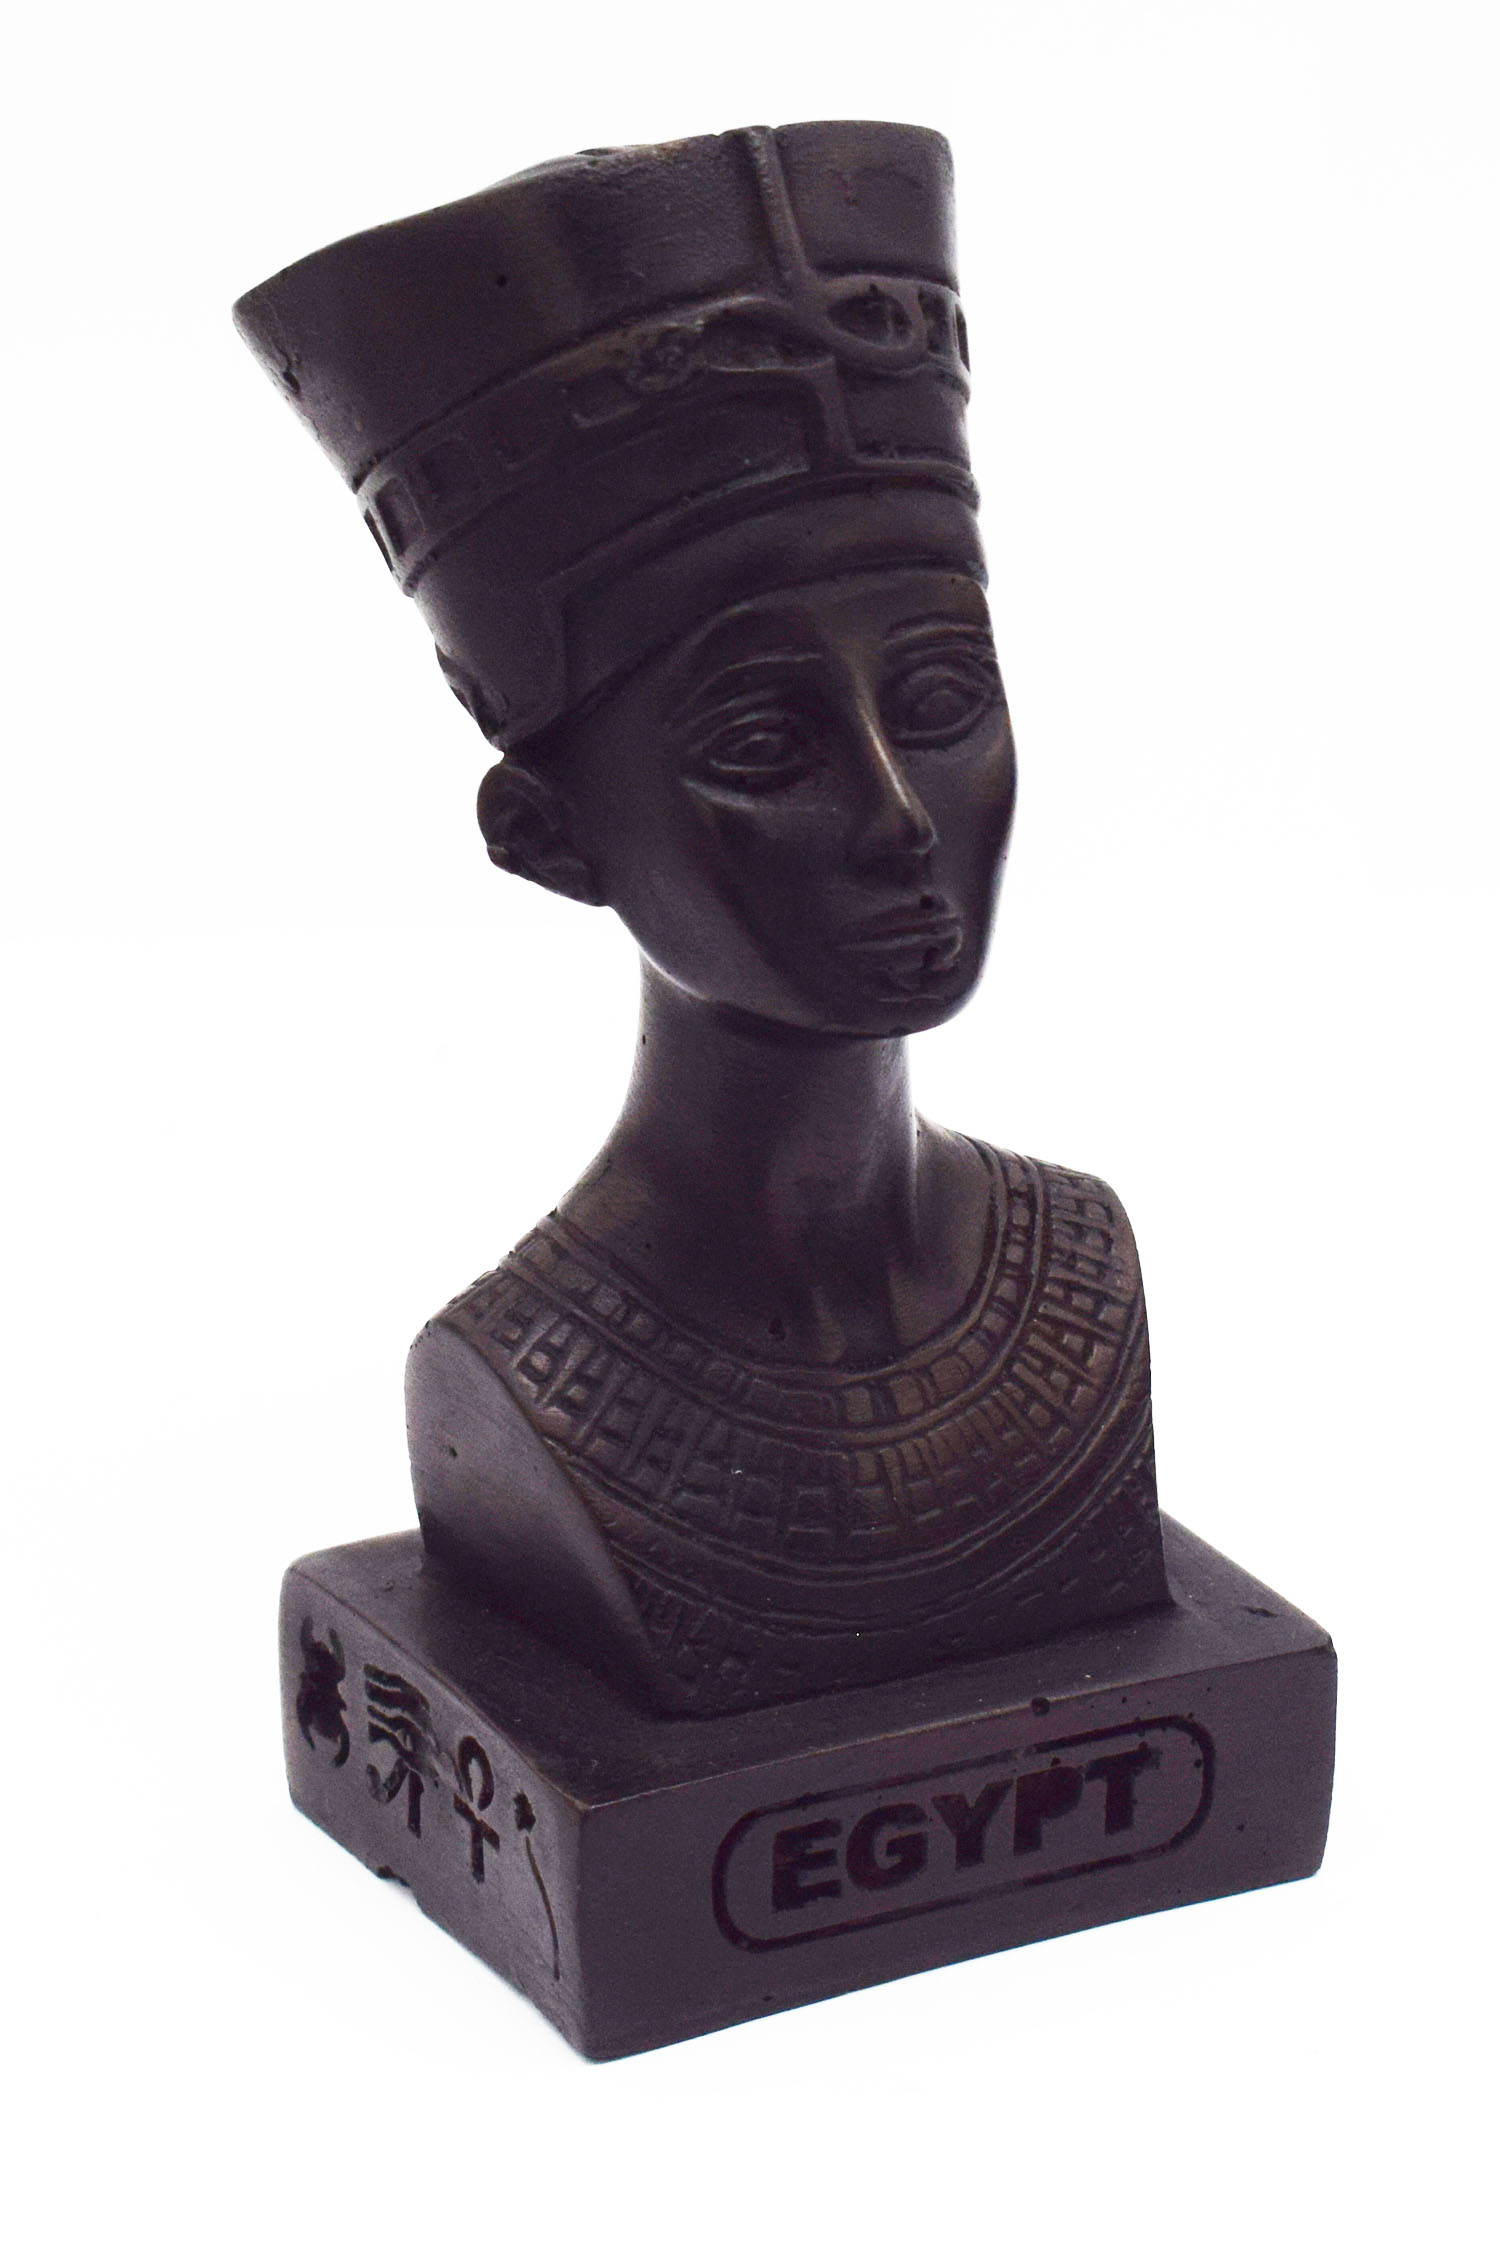 immatgar pharaonic Egyptian Queen Nefertiti Statue Egyptian souvenirs gifts  for Women Girls and mother ( Black - 12 CM long )